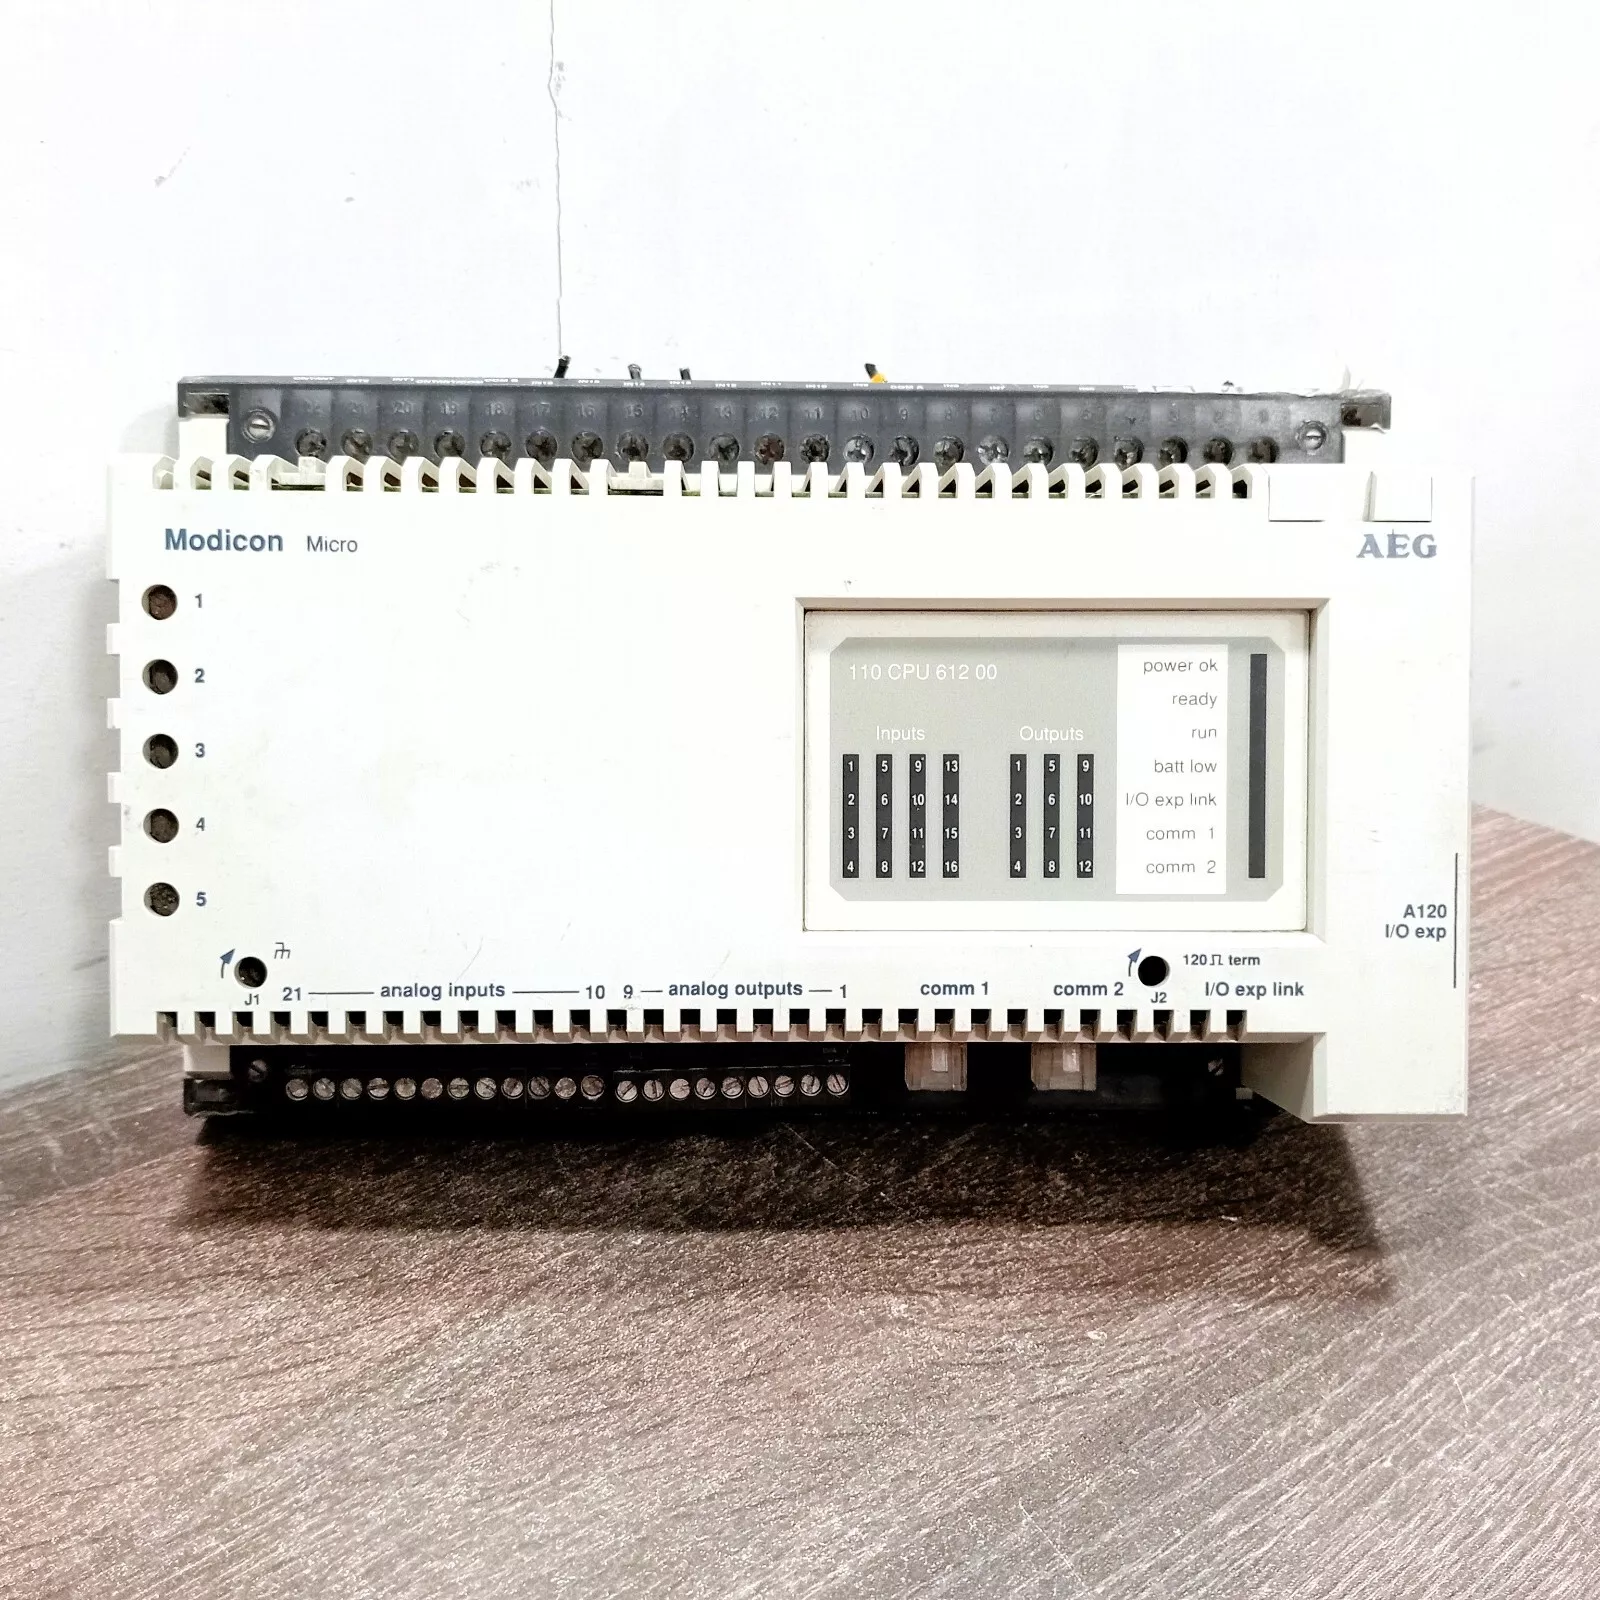 SCHNEIDER  110-CPU-612-00 MICRO CPU PLC DC POWER SUPPLY ANALOG I/O DISCONTINUED BY MANUFACTURER